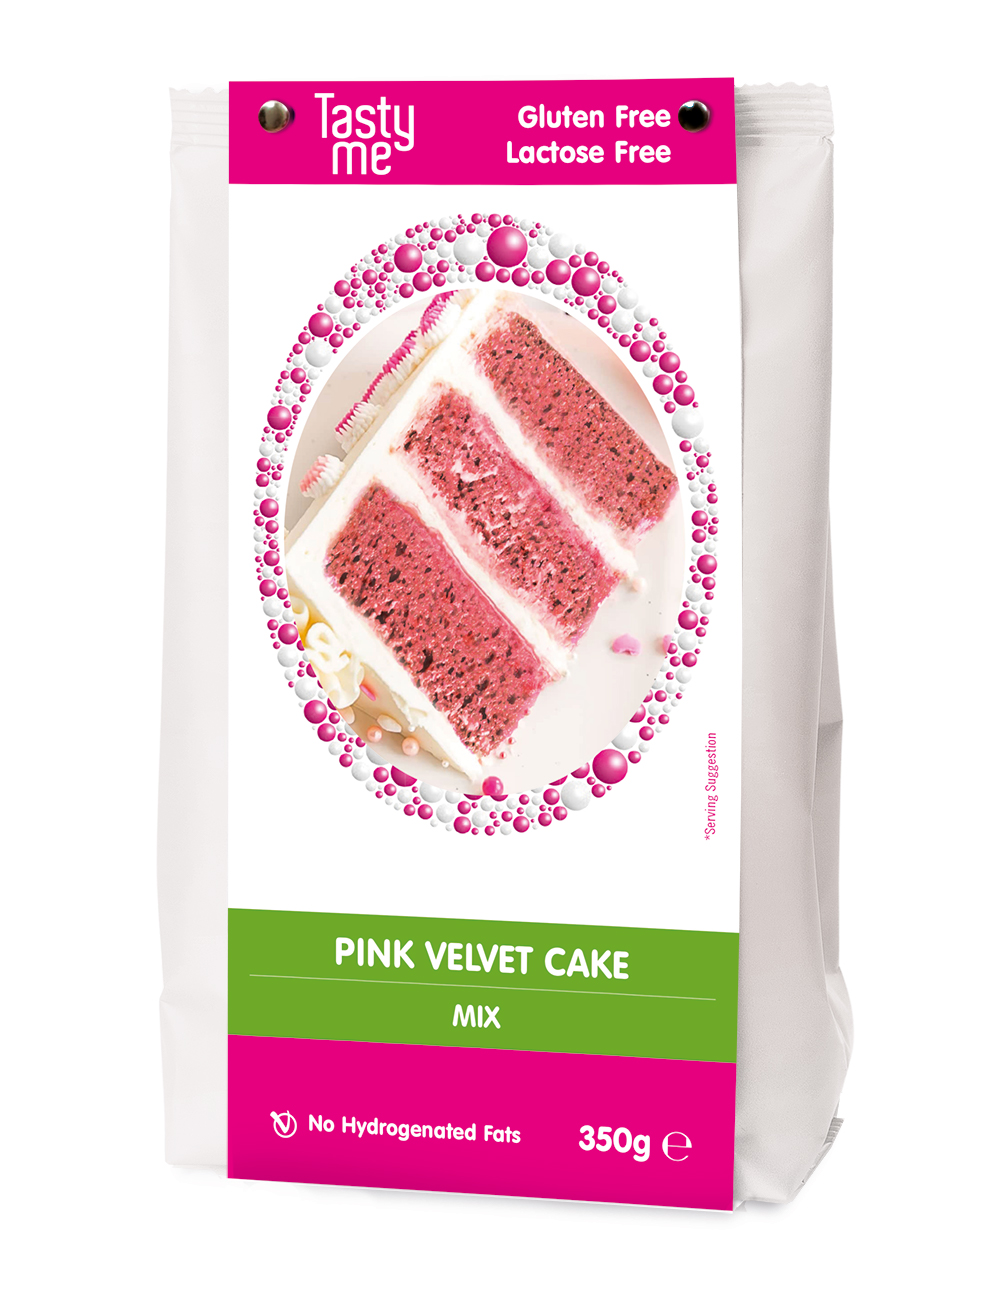 Pink velvet cake mix 350g - gluten-free